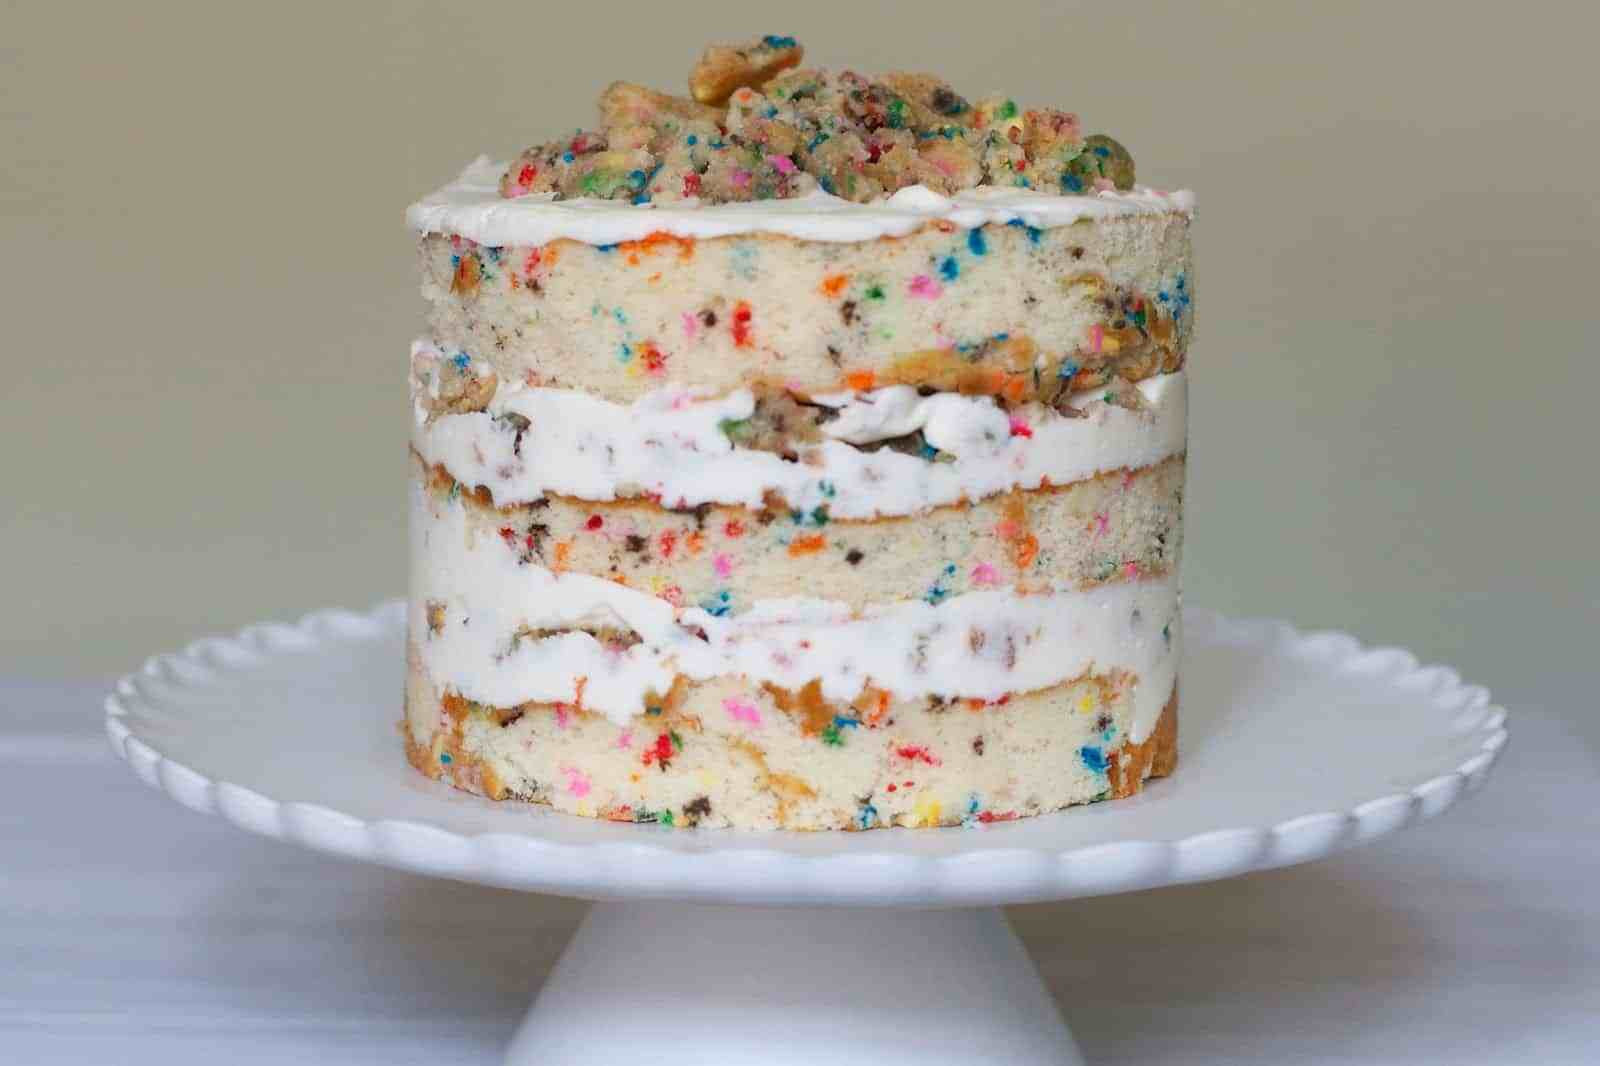 Best ideas about Milk Bar Birthday Cake
. Save or Pin Milk Bar Monday Birthday Layer Cake Now.